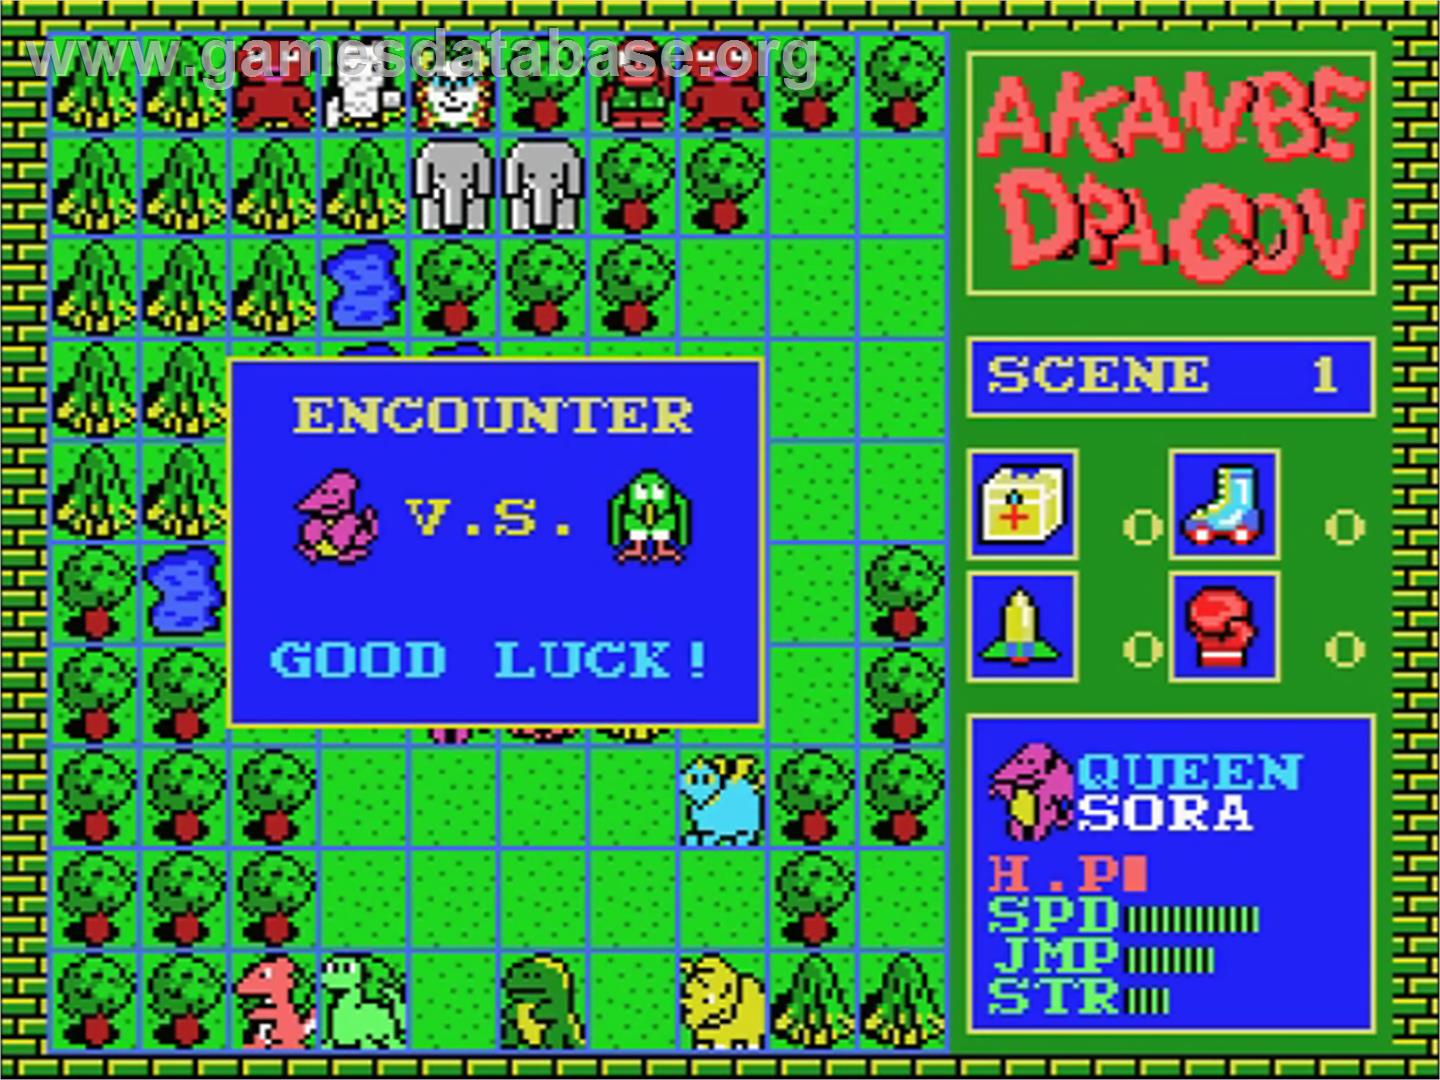 Akanbe Dragon - MSX 2 - Artwork - In Game